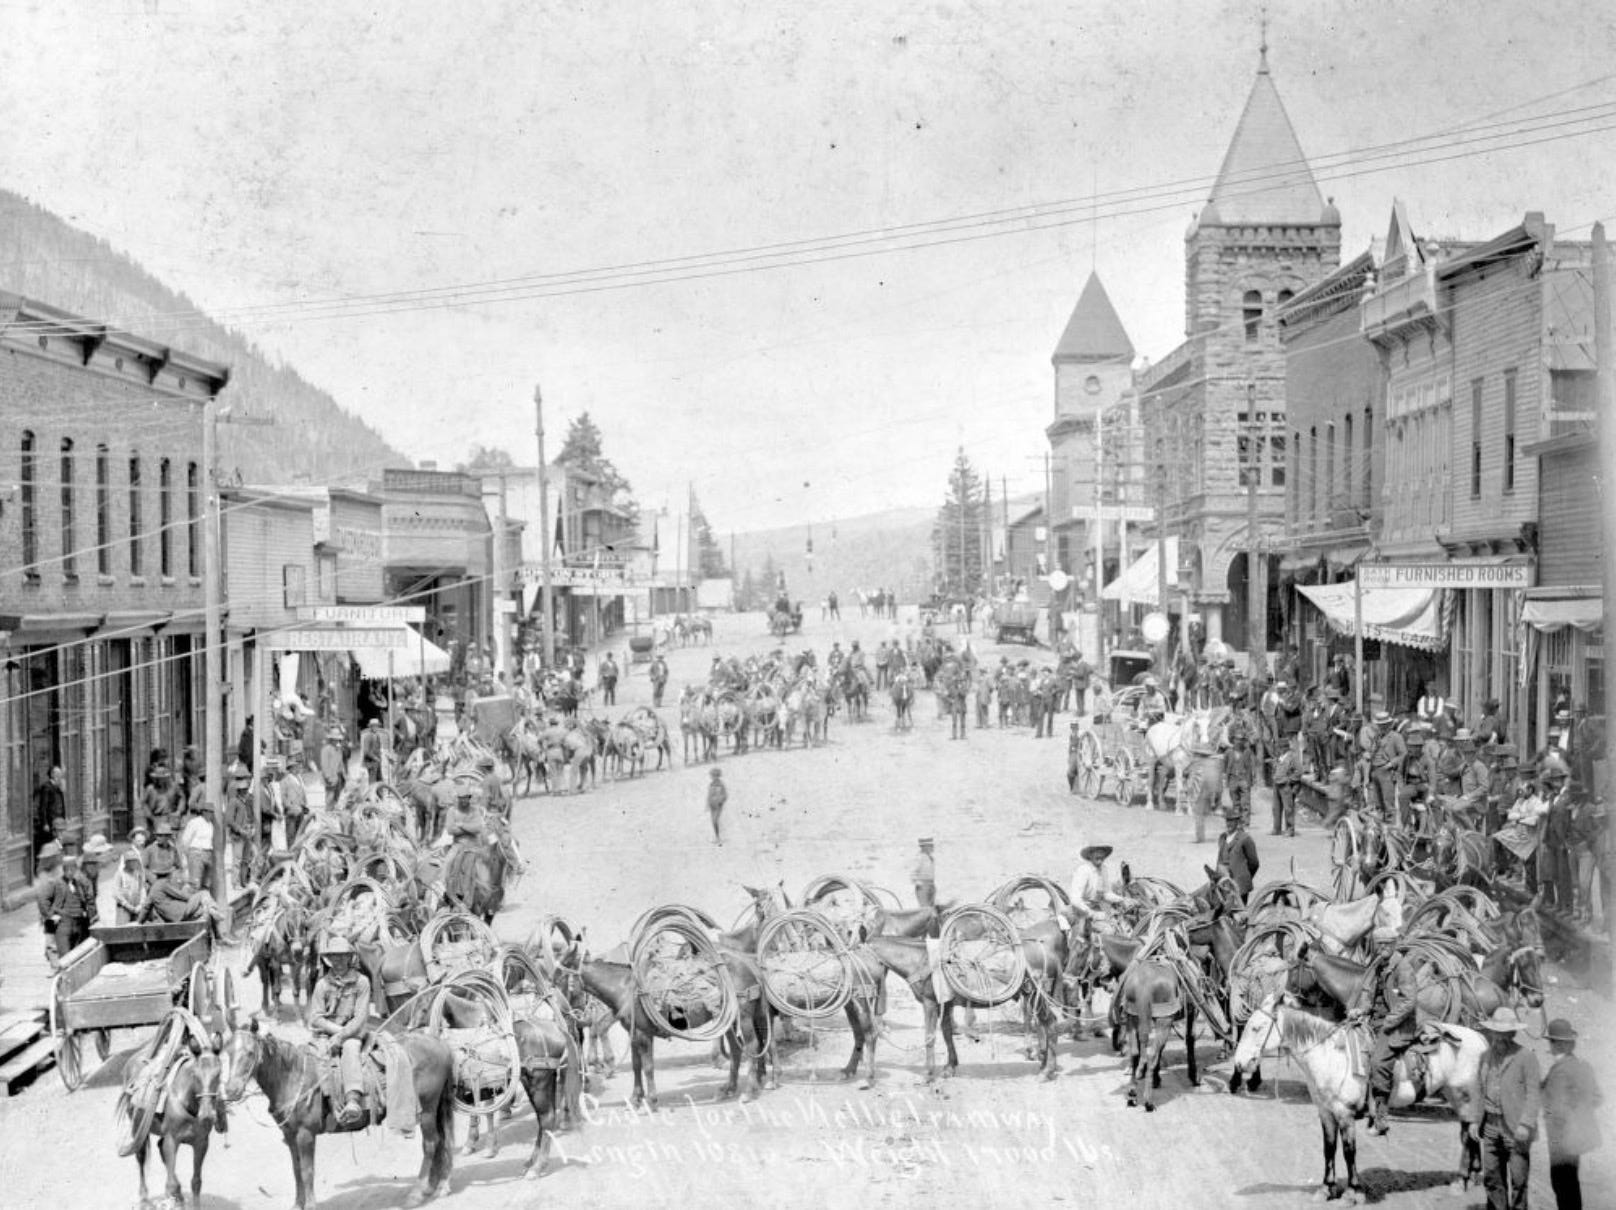 Idaho Springs, Colorado: Where the Gold Rush Began - Travel Magazine